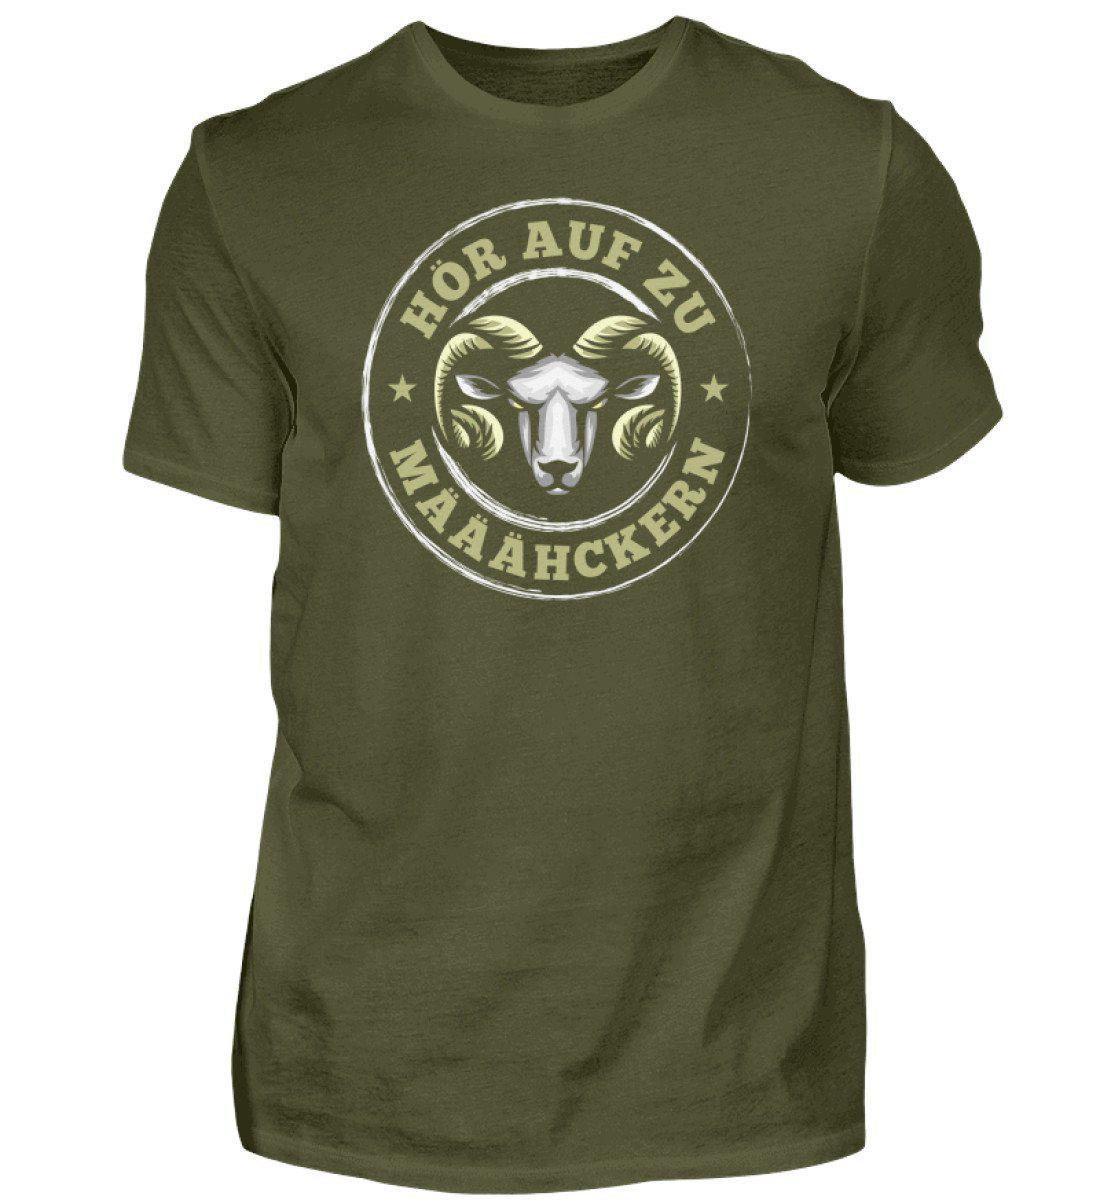 Hör auf zu määähckern · Herren T-Shirt-Herren Basic T-Shirt-Urban Khaki-S-Agrarstarz